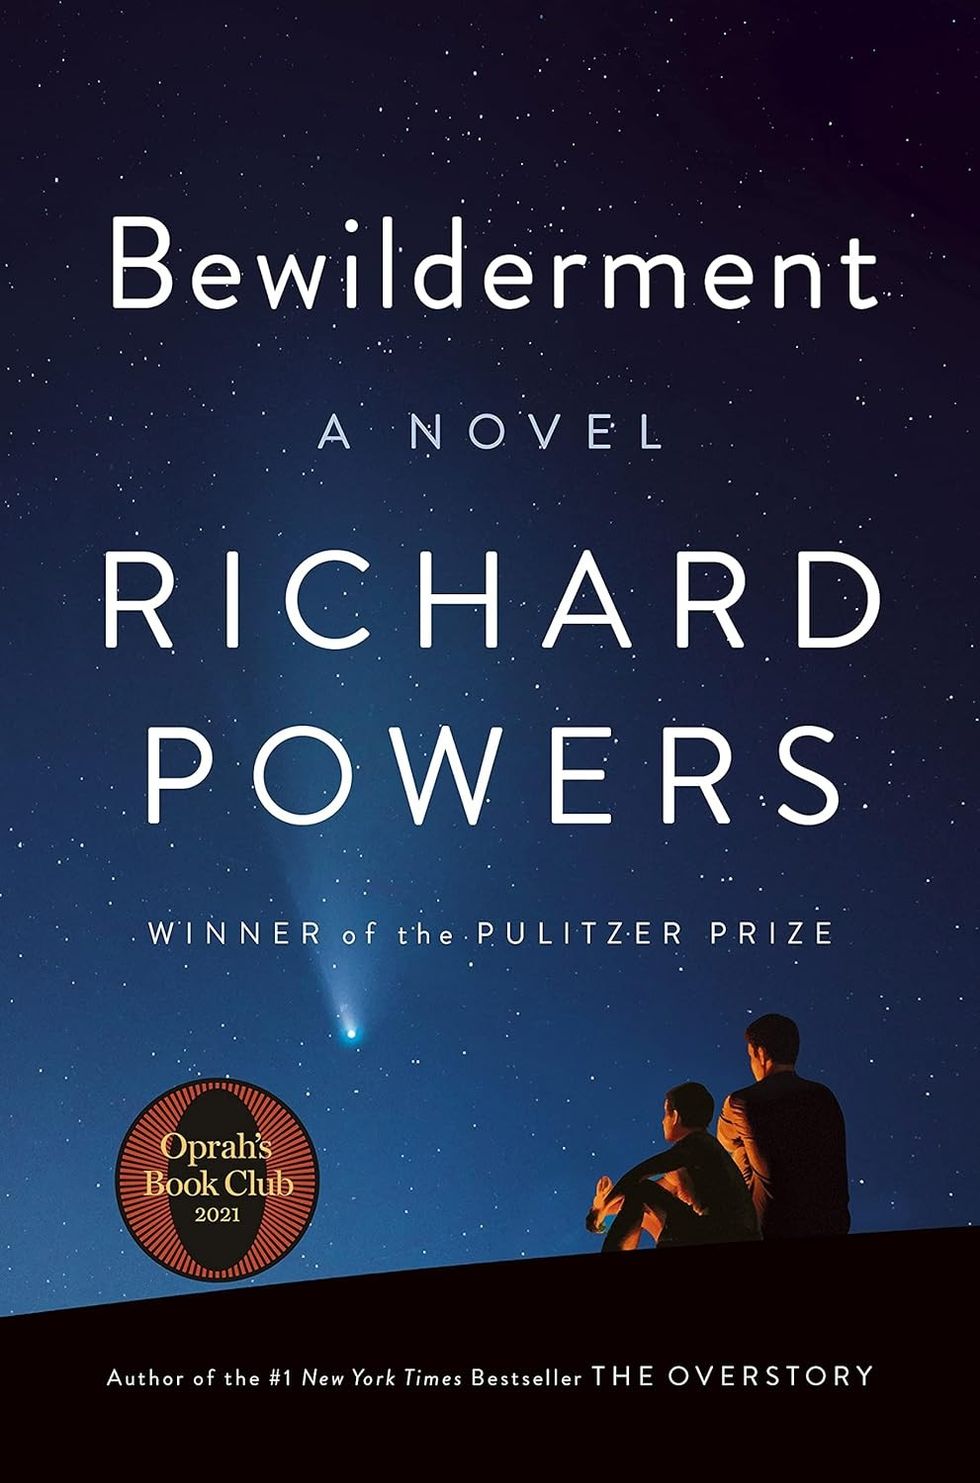 "Bewilderment" by Richard Powers